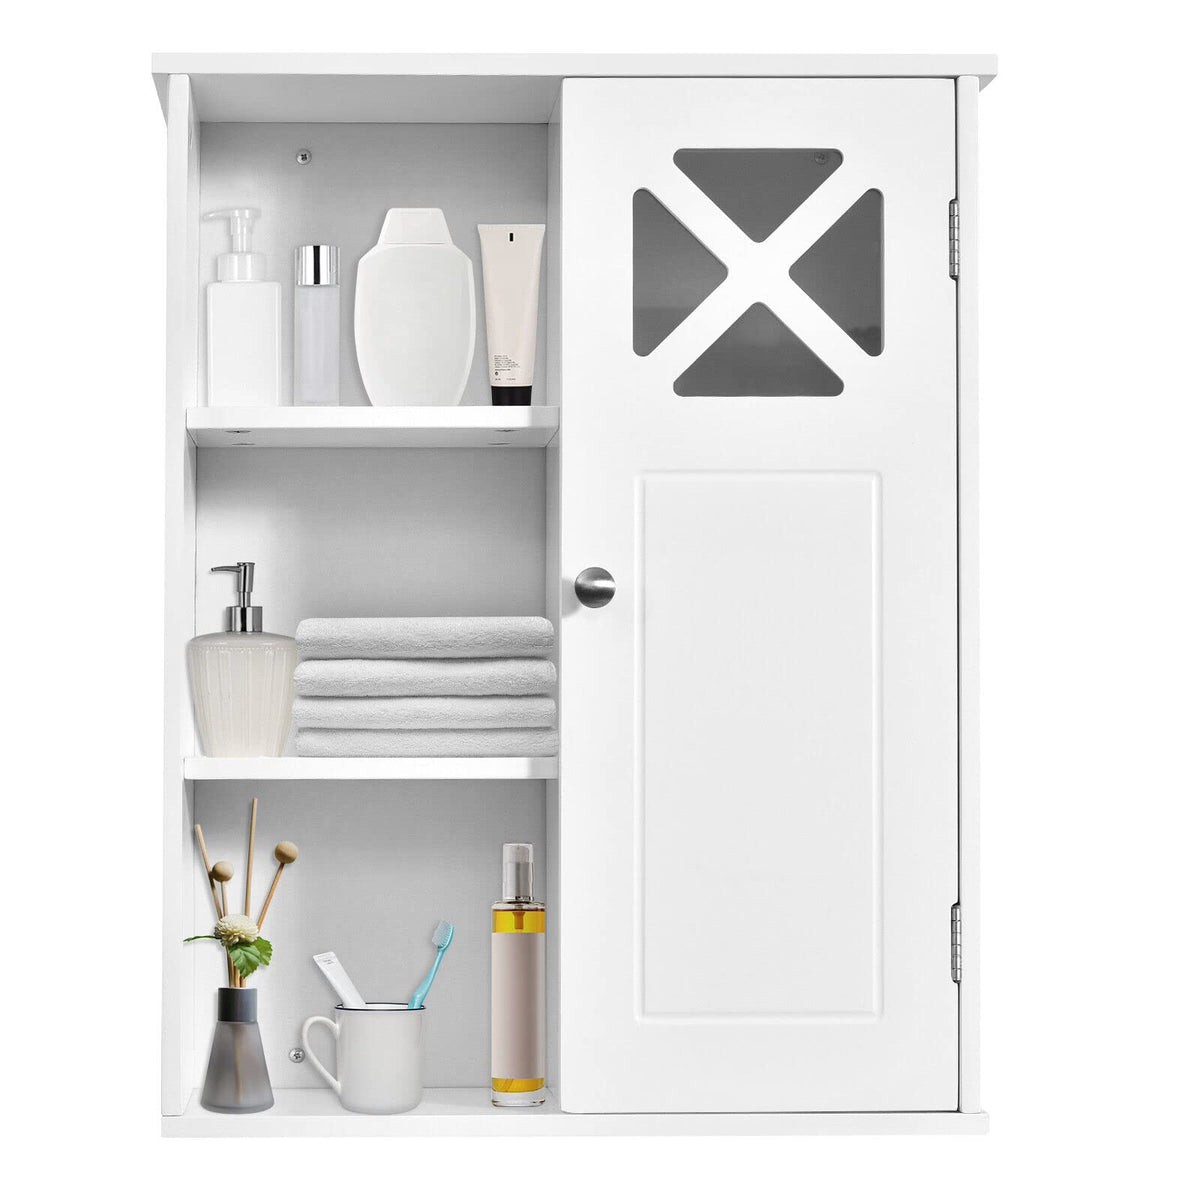 Bathroom Medicine Cabinet, Wall-Mounted Storage Cabinet, White